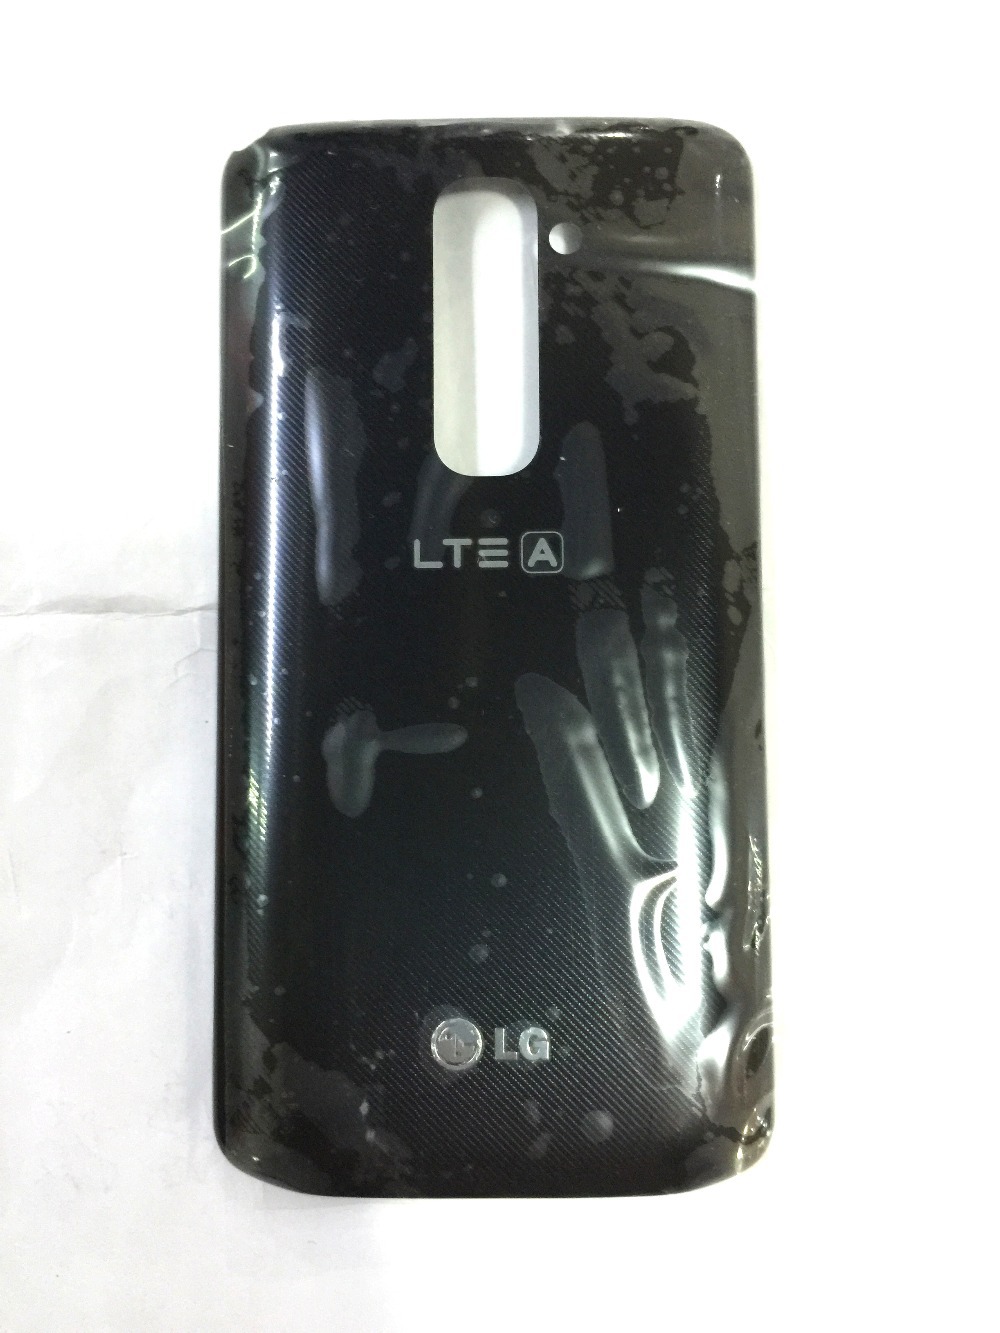    LG G2 F320    NFC        